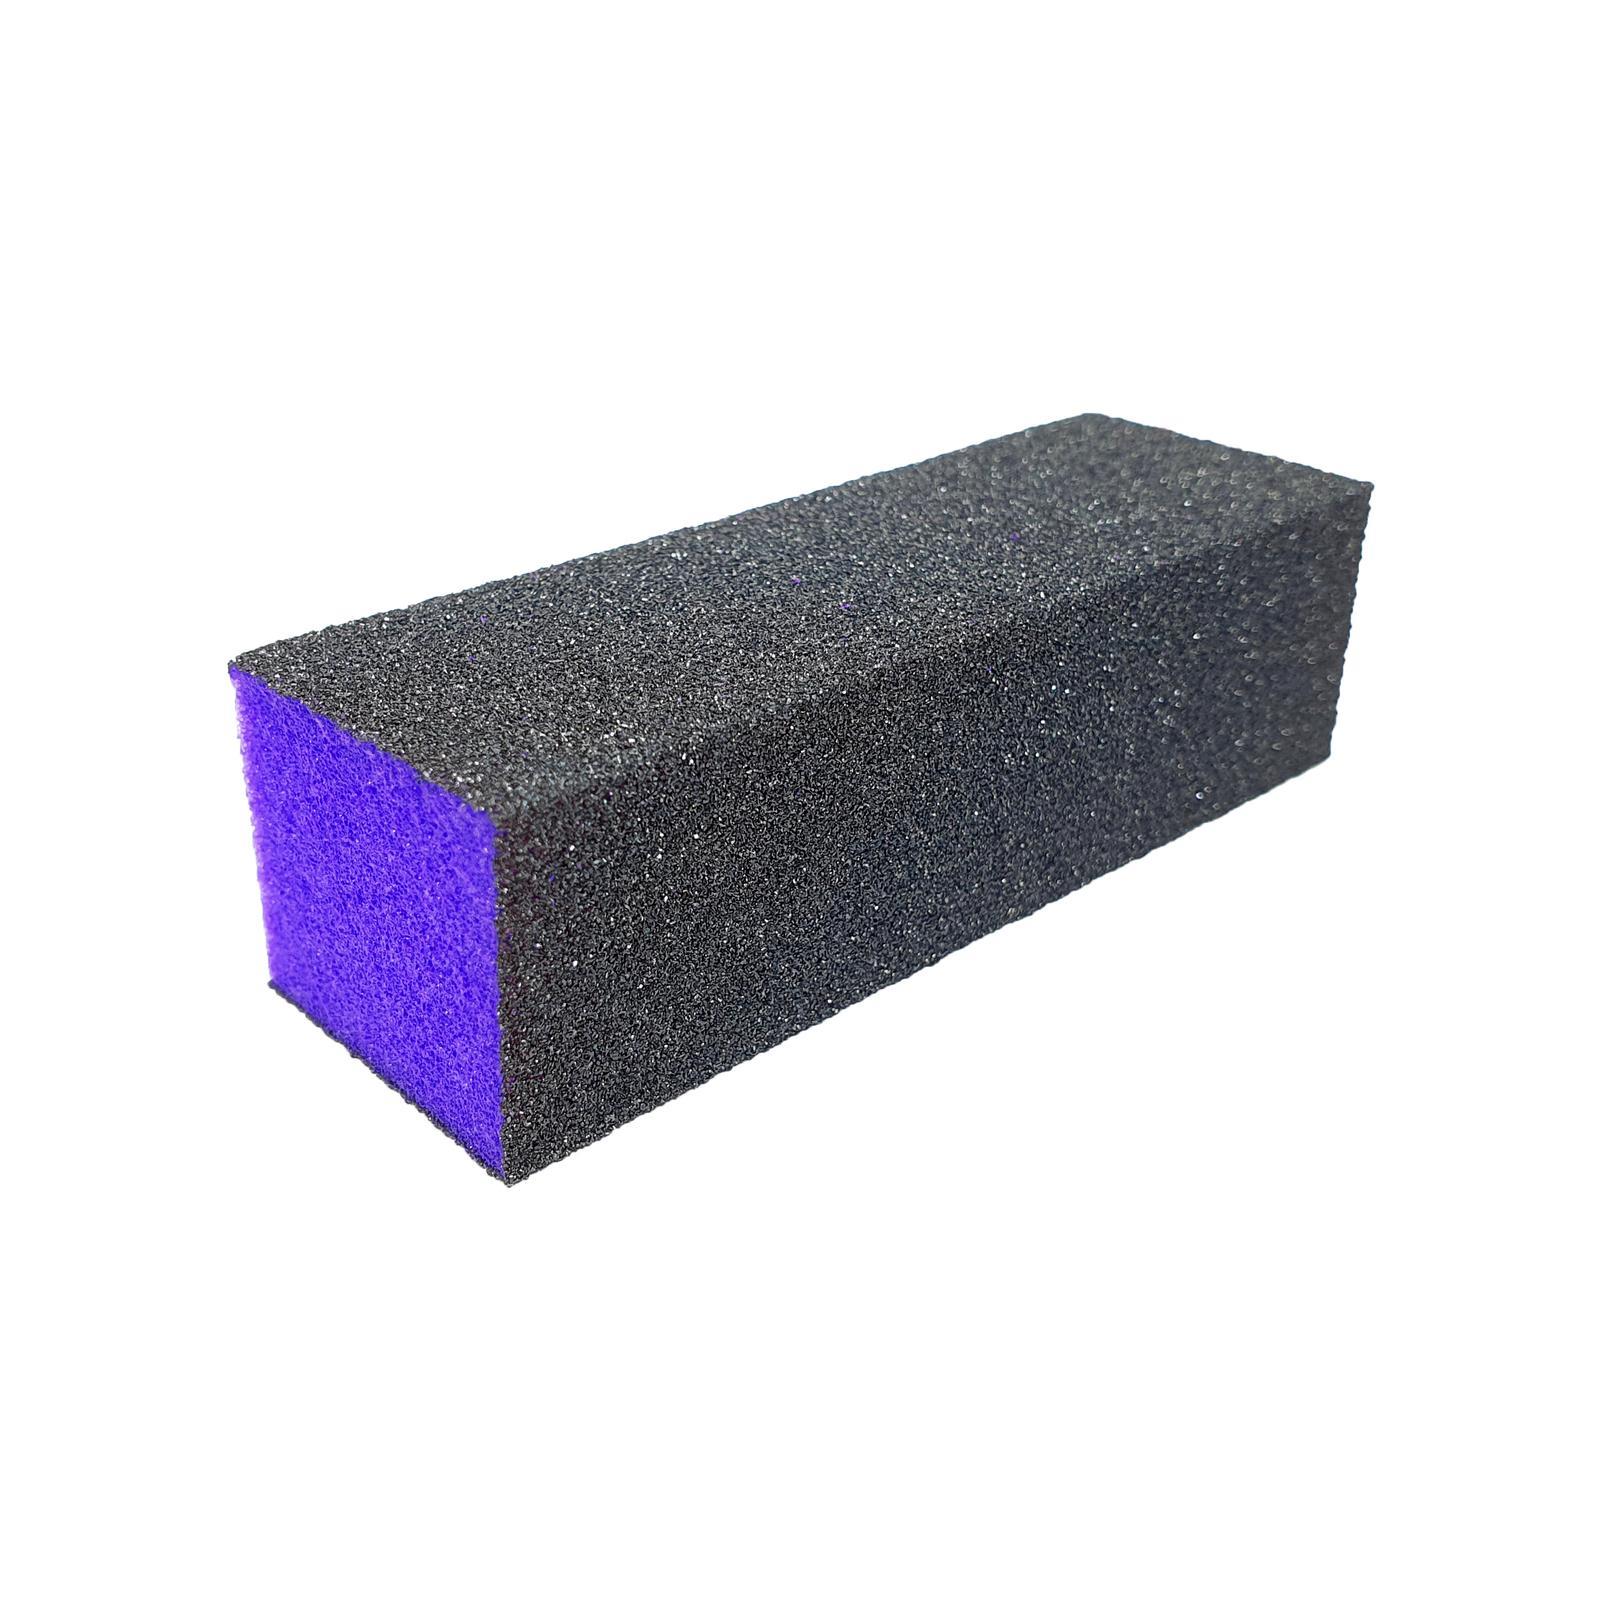 1 x Buffer 3-Way Sanding File Nail Buffing Block Purple Black Grit 80/100